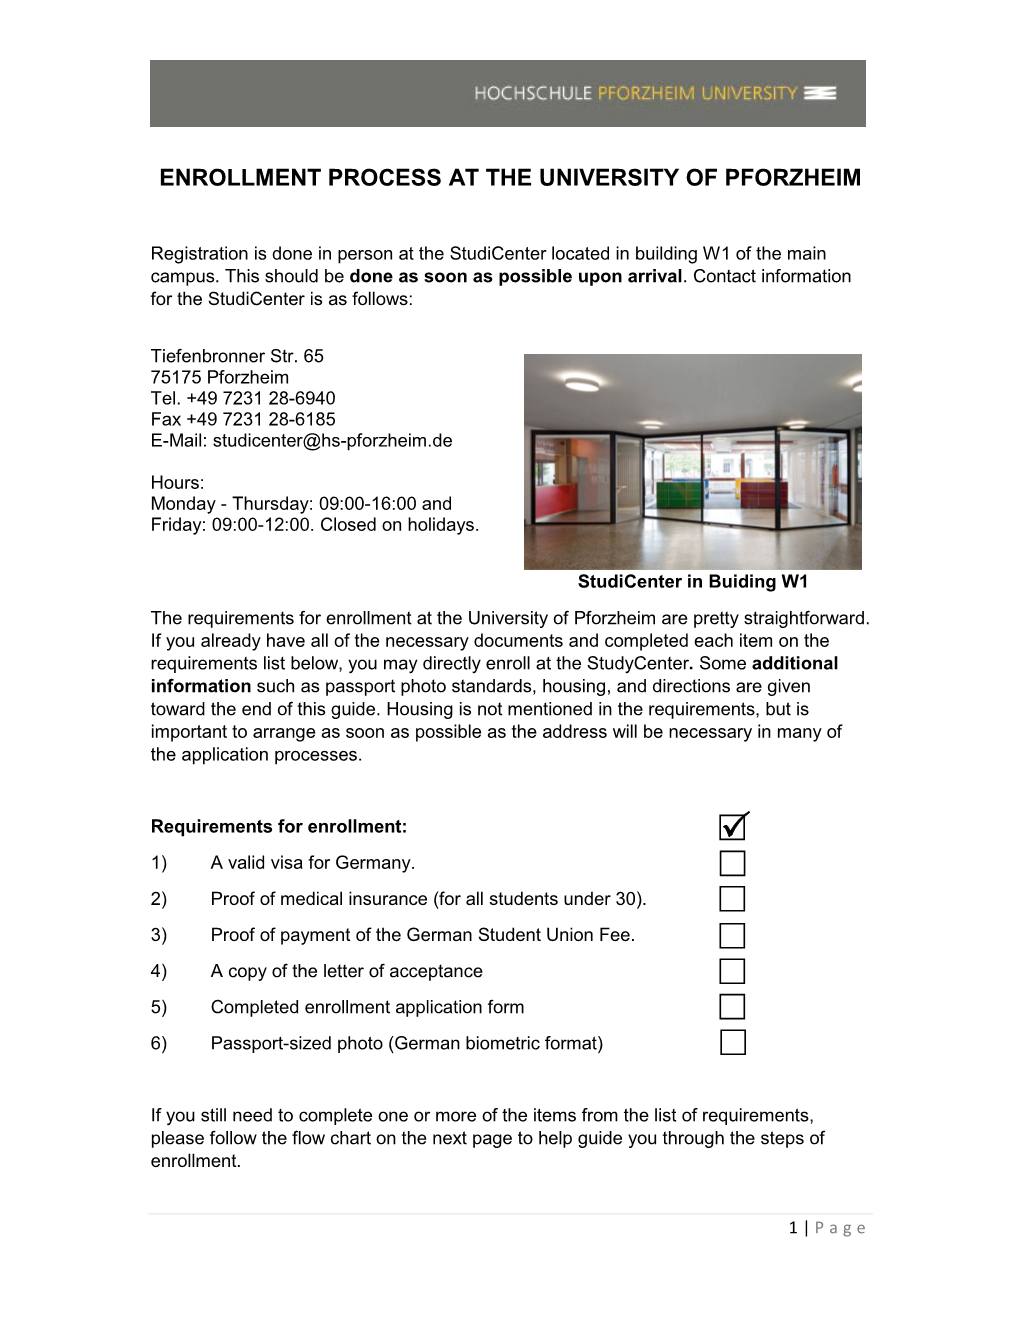 Enrollment Process at the University of Pforzheim